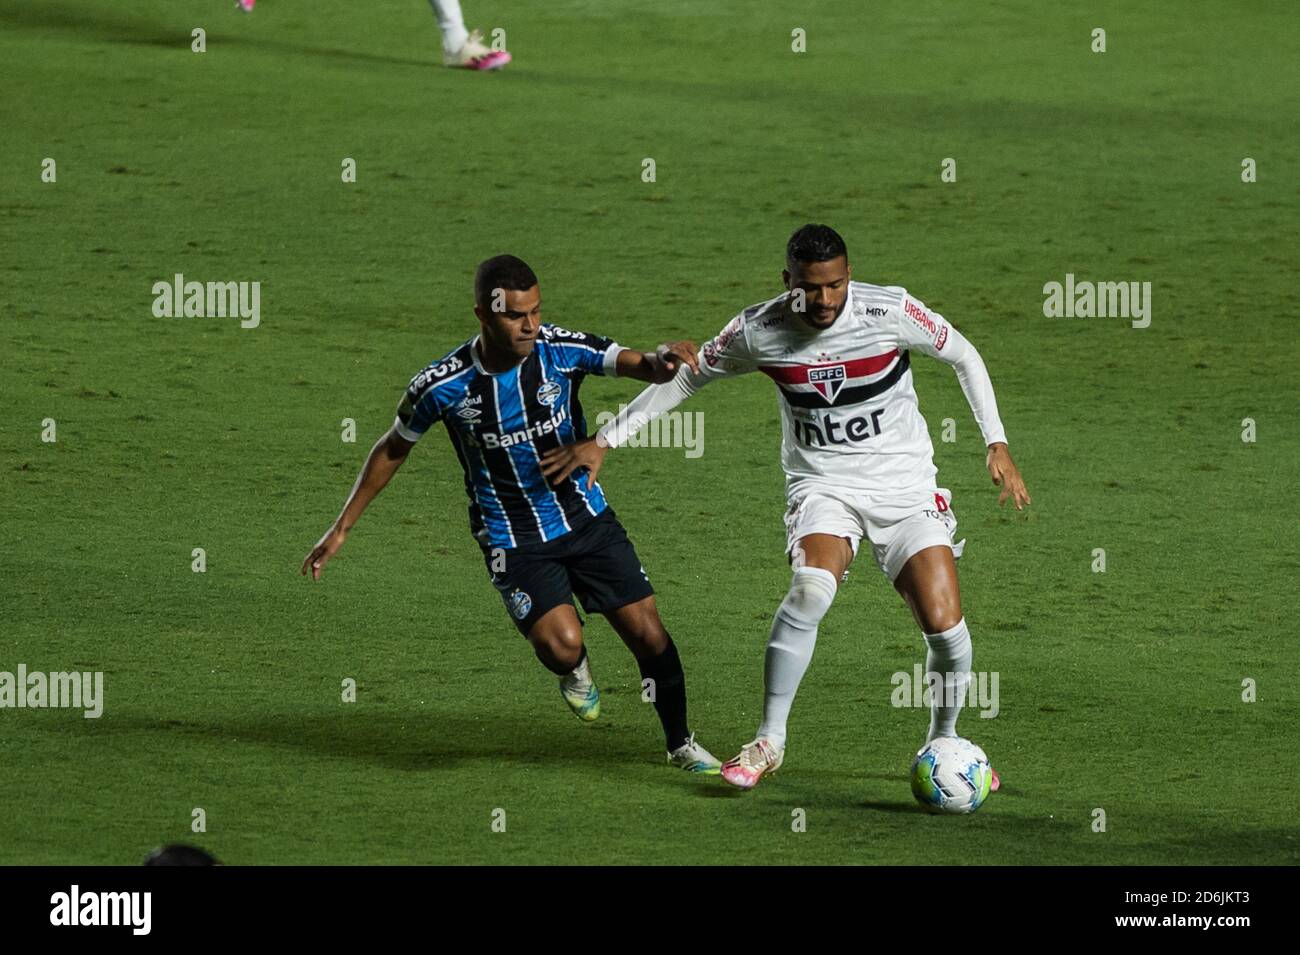 SP - Sao Paulo - 14/08/2021 - BRAZILIAN IN 2021, SAO PAULO X GREMIO -  Galeano, Sao Paulo player disputes a bid with Vanderson, Gremio player  during a match at Morumbi stadium